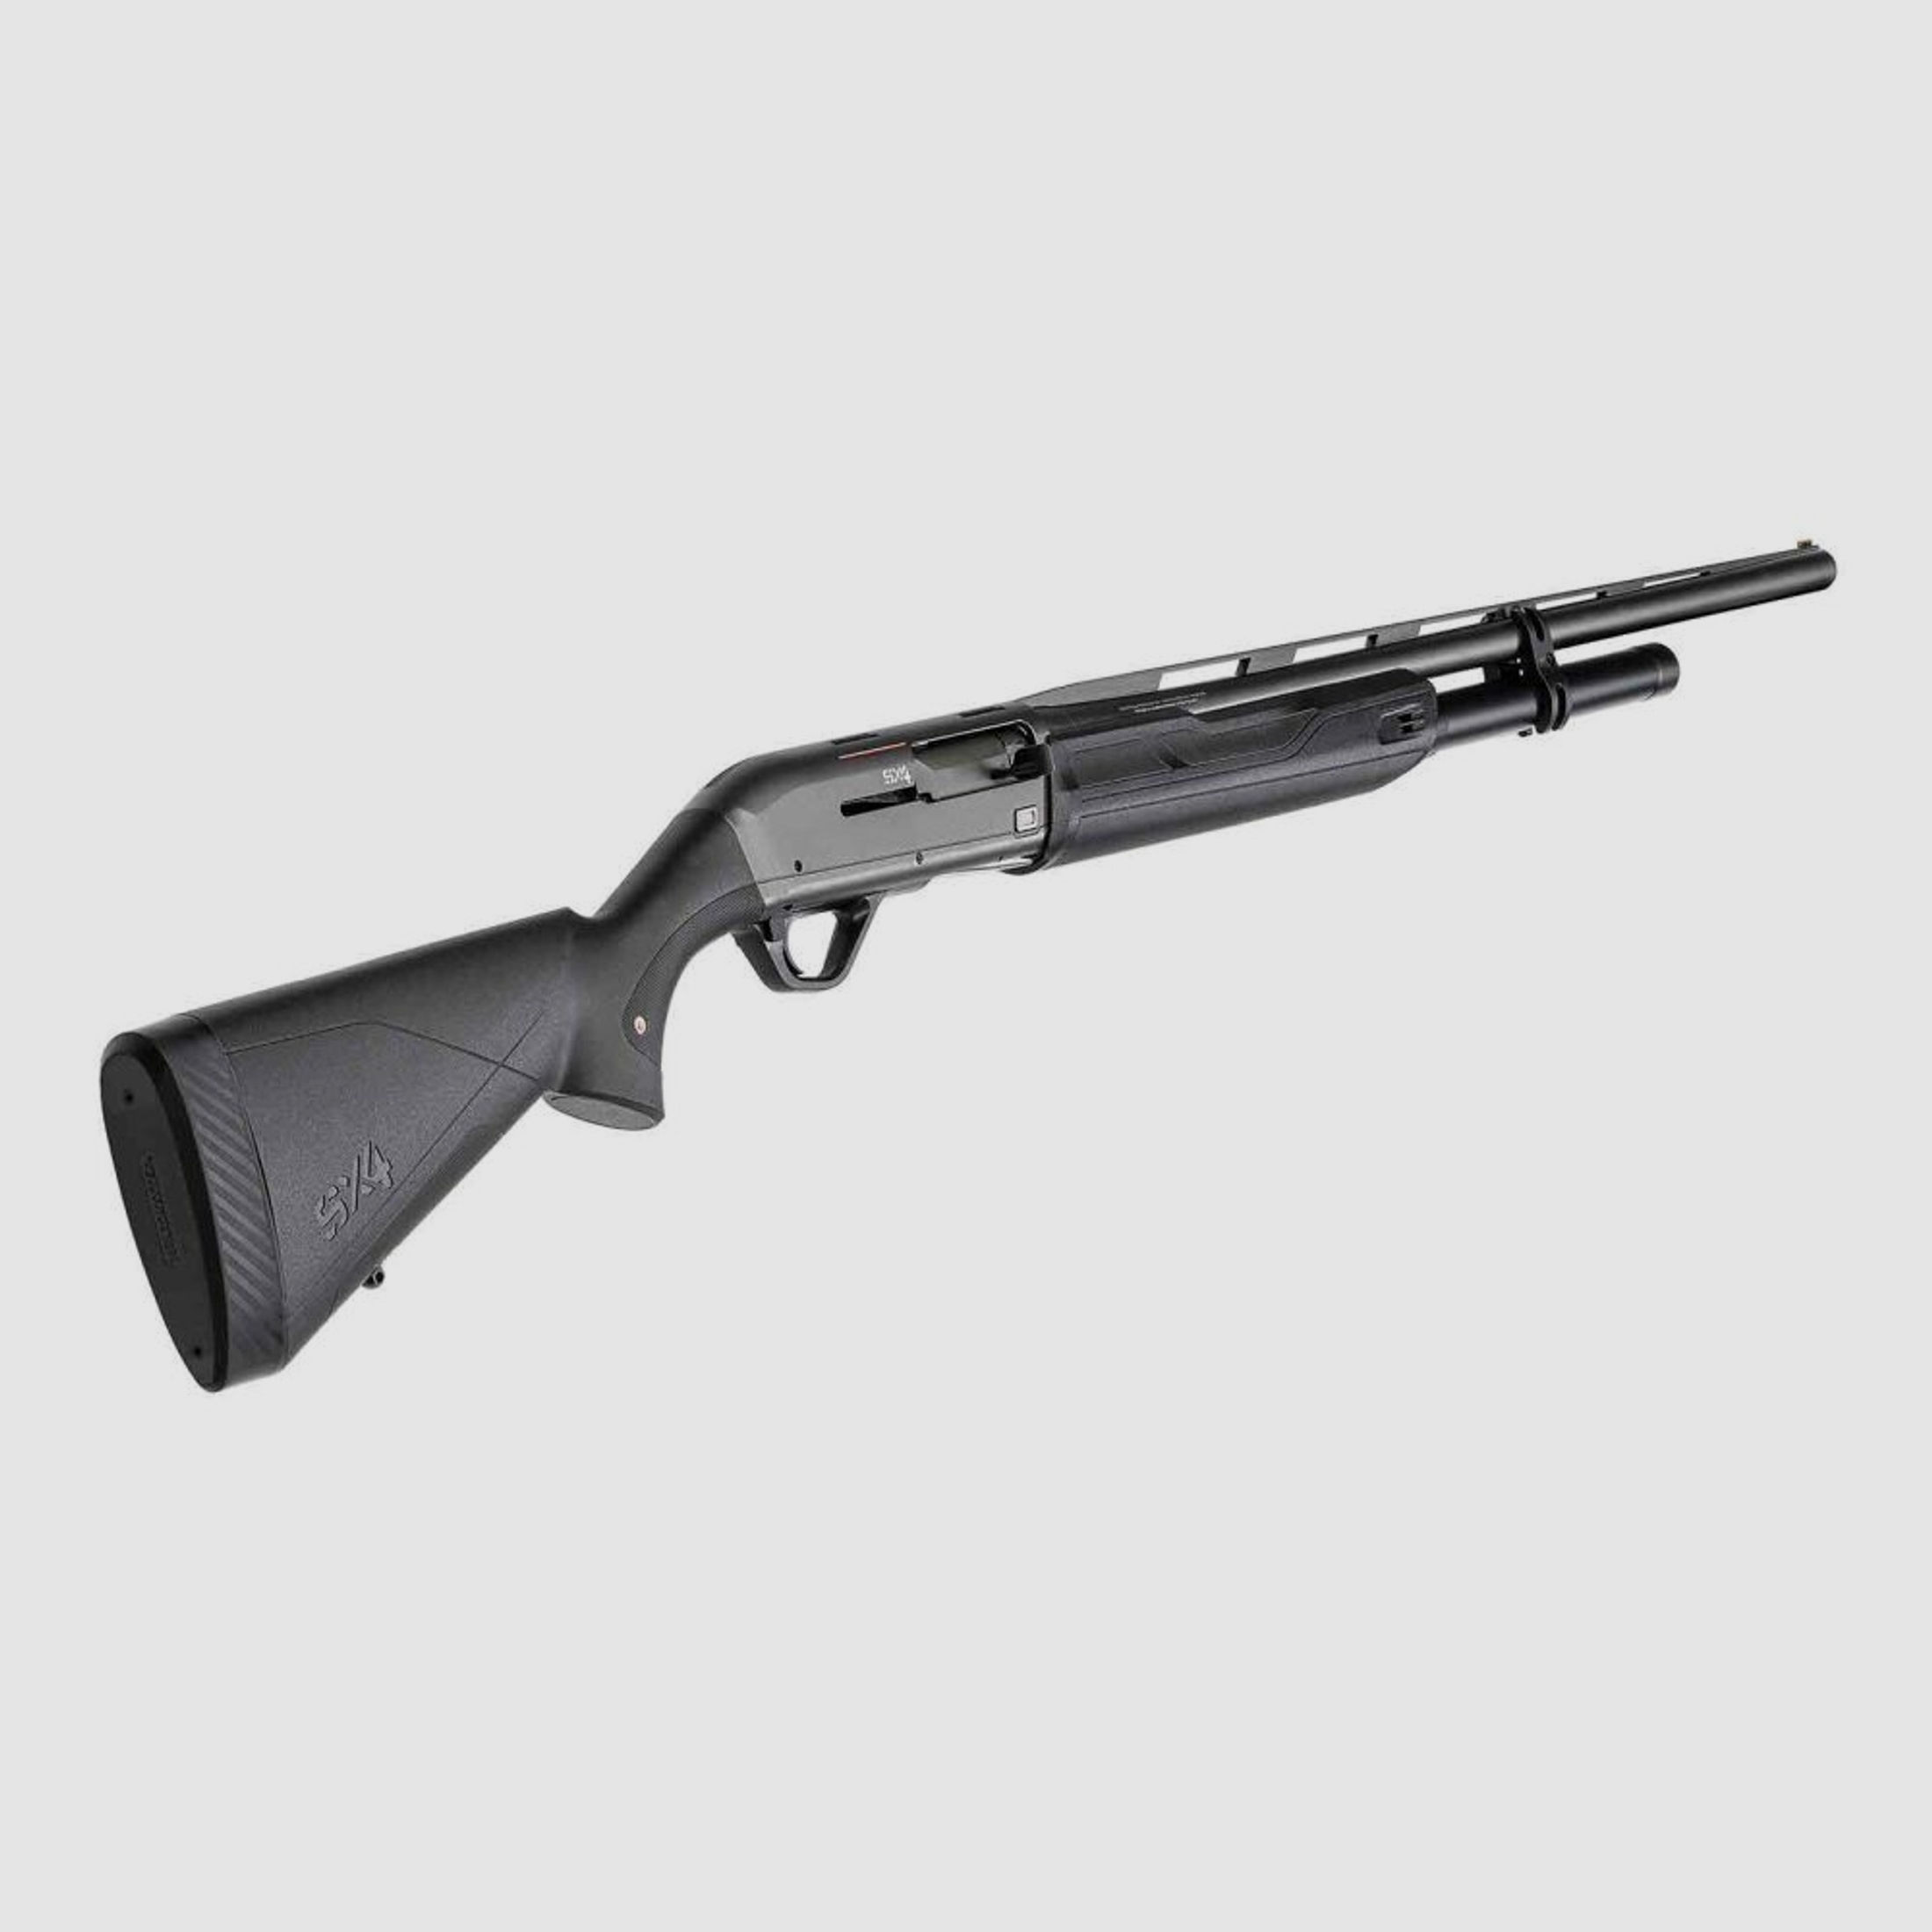 Winchester	 SX4 9 Rounds Composite 71cm